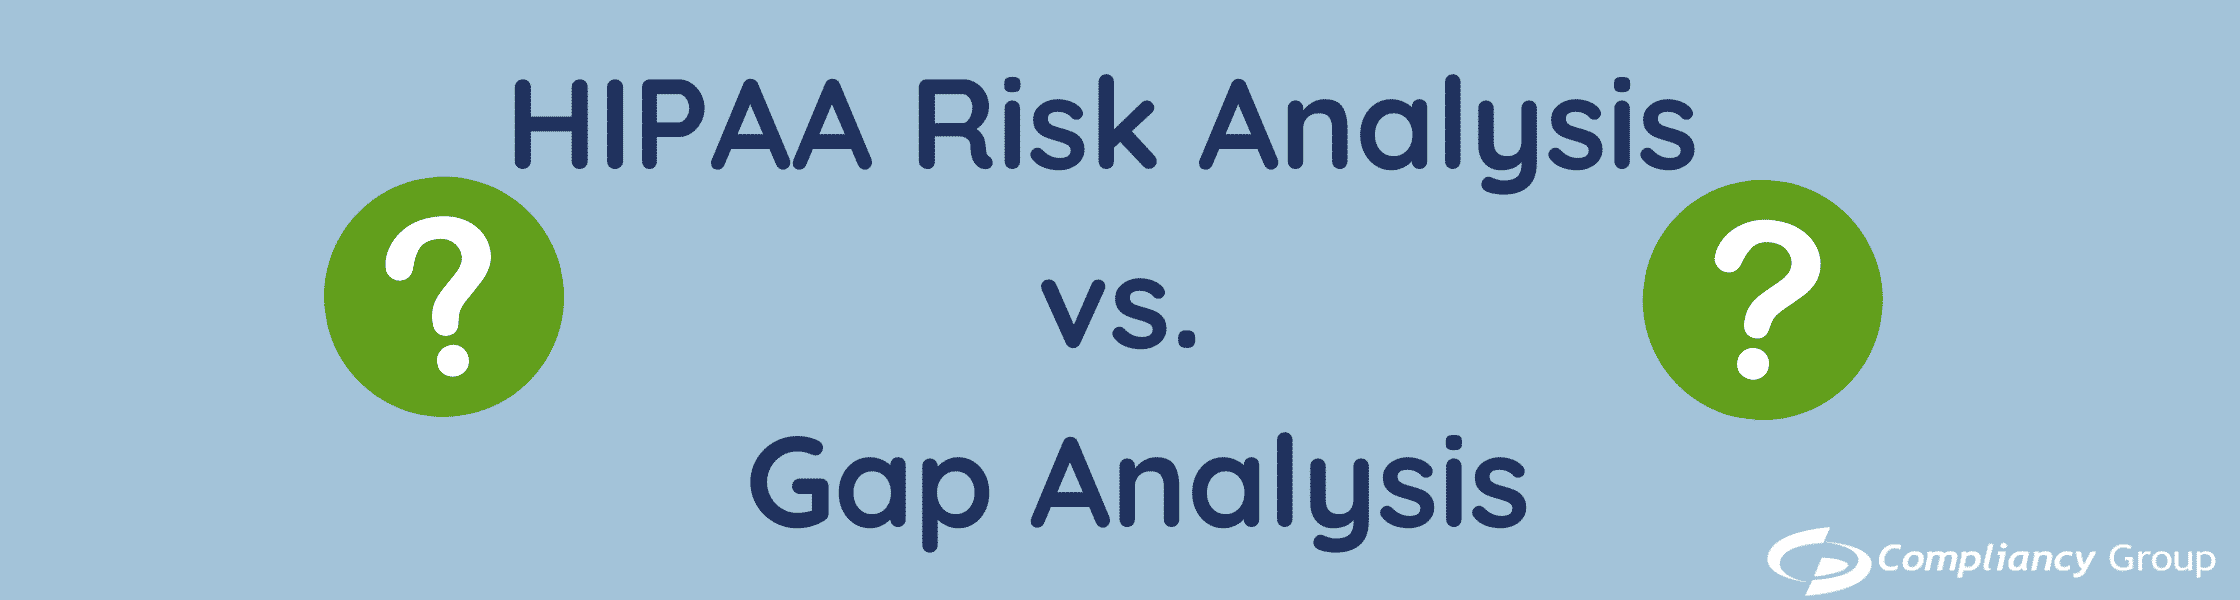 HIPAA Risk Analysis v. Gap Analysis